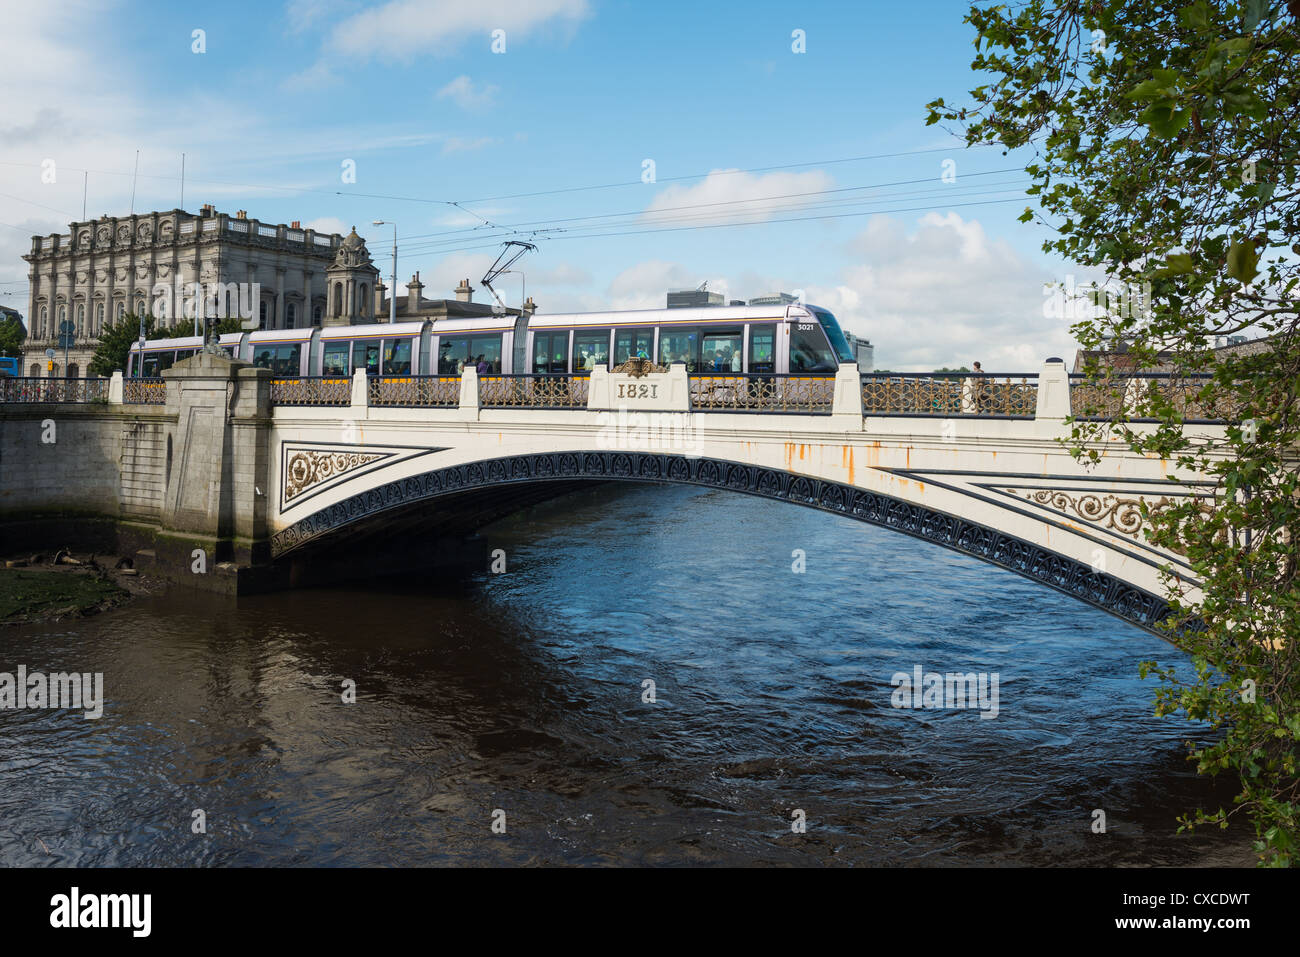 LUAS Tram on the Sean Heuston Bridge Over the River Liffey, Dublin City, Ireland. Stock Photo